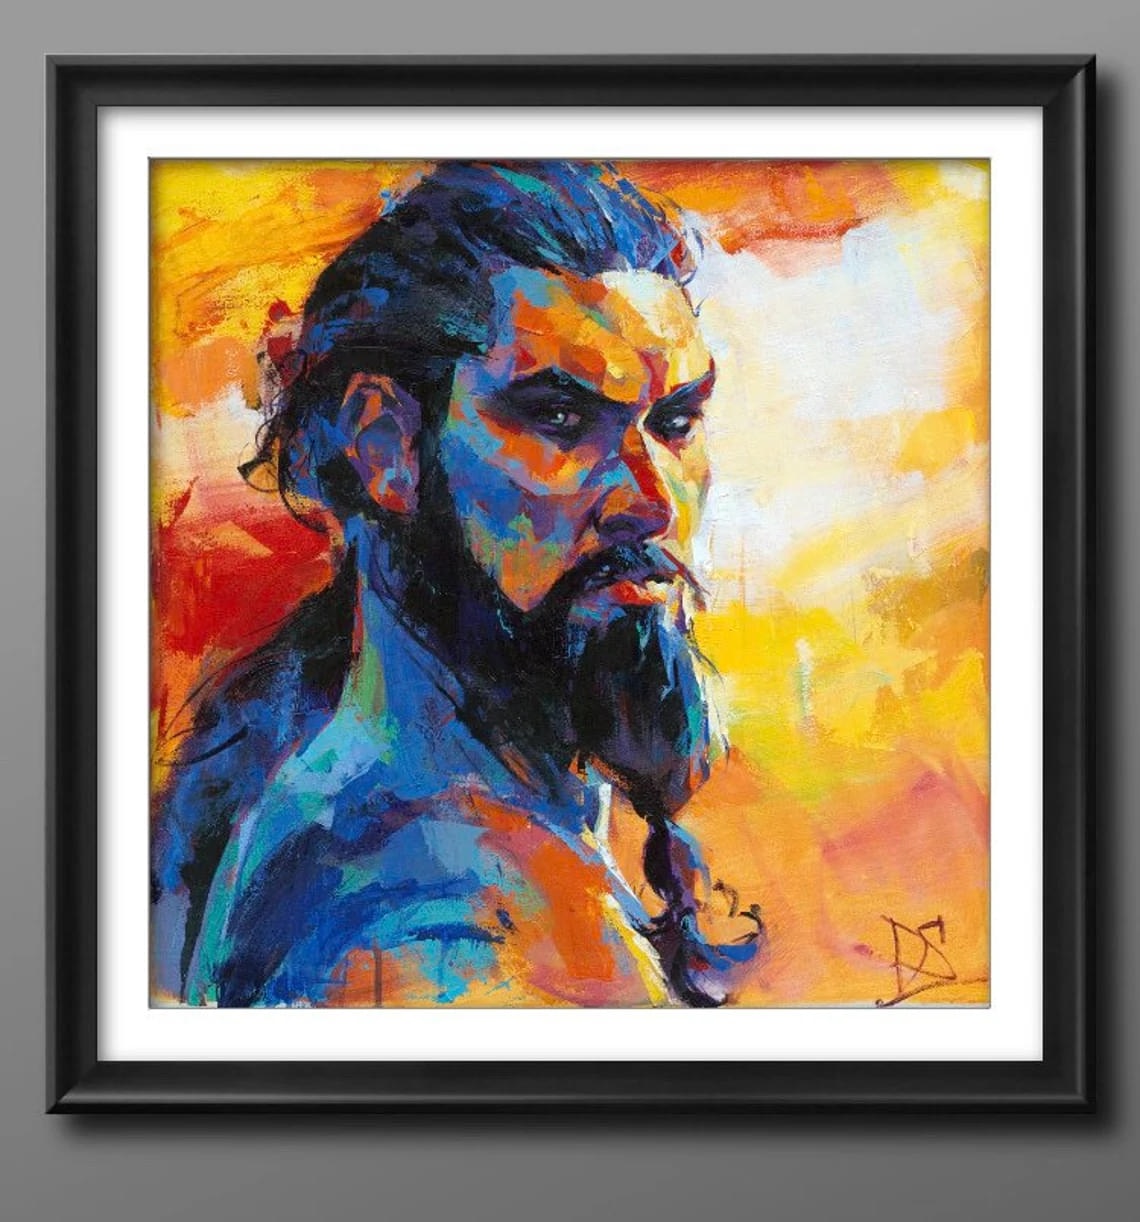 "Khal Drogo" - Game of Thrones Portraits Artwork Sample on Wall